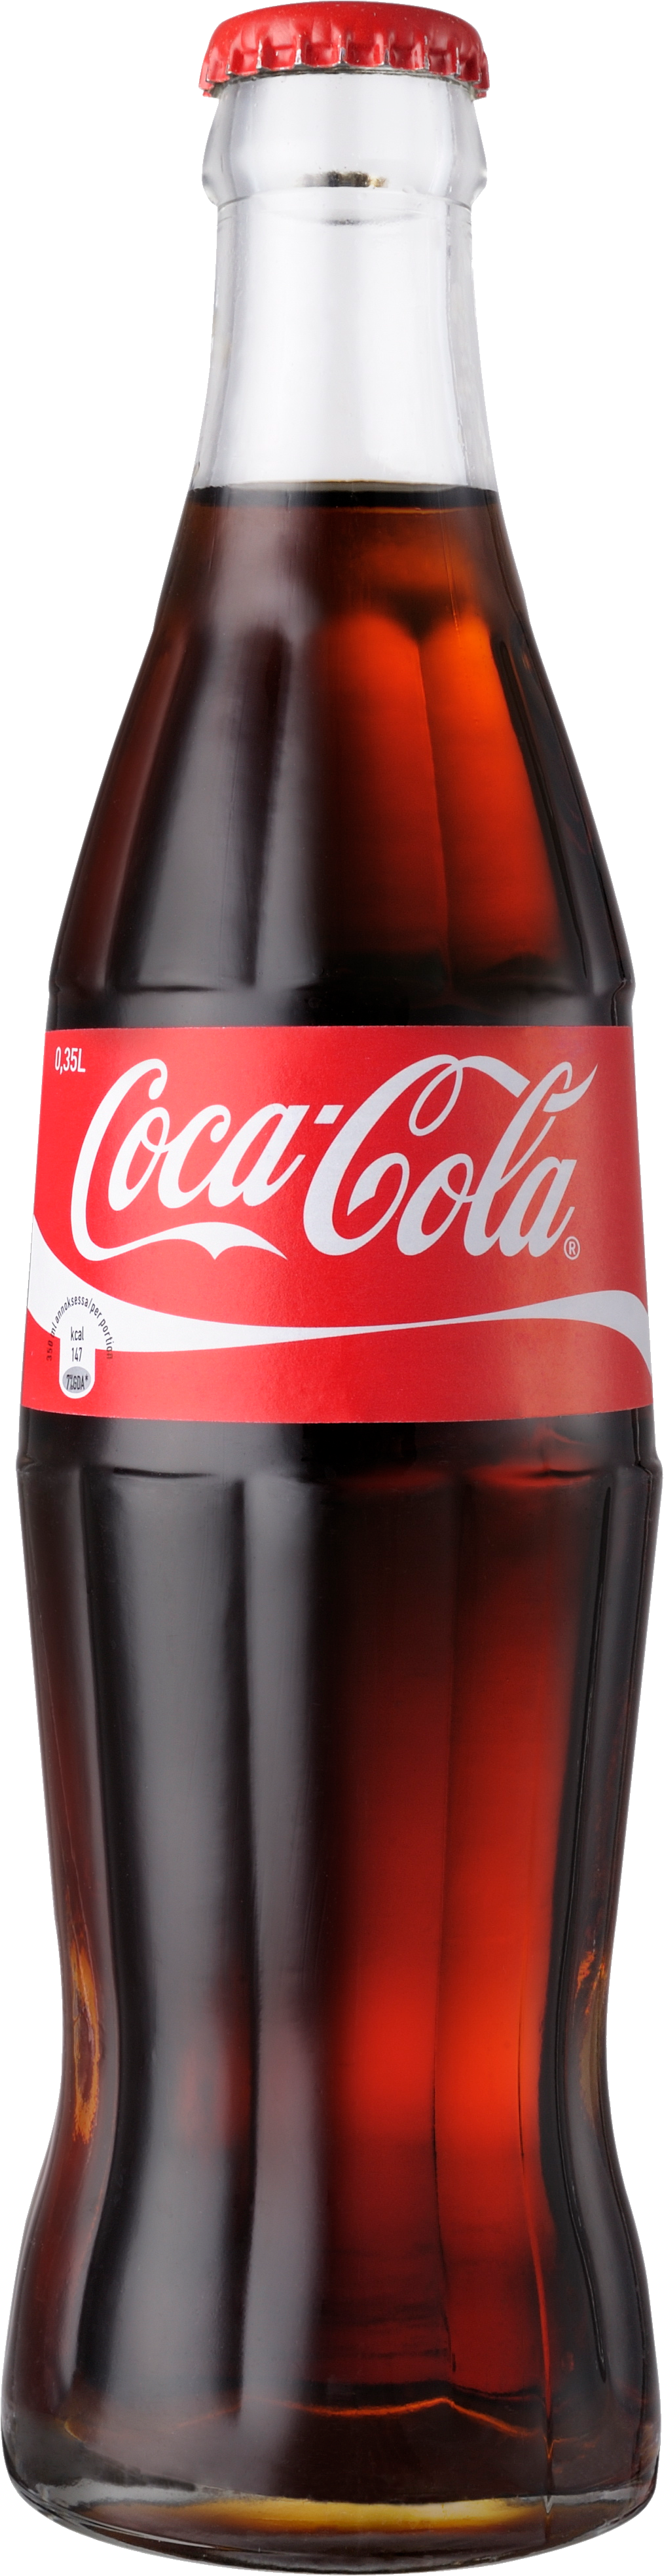 Coca Cola clipart #19, Download drawings